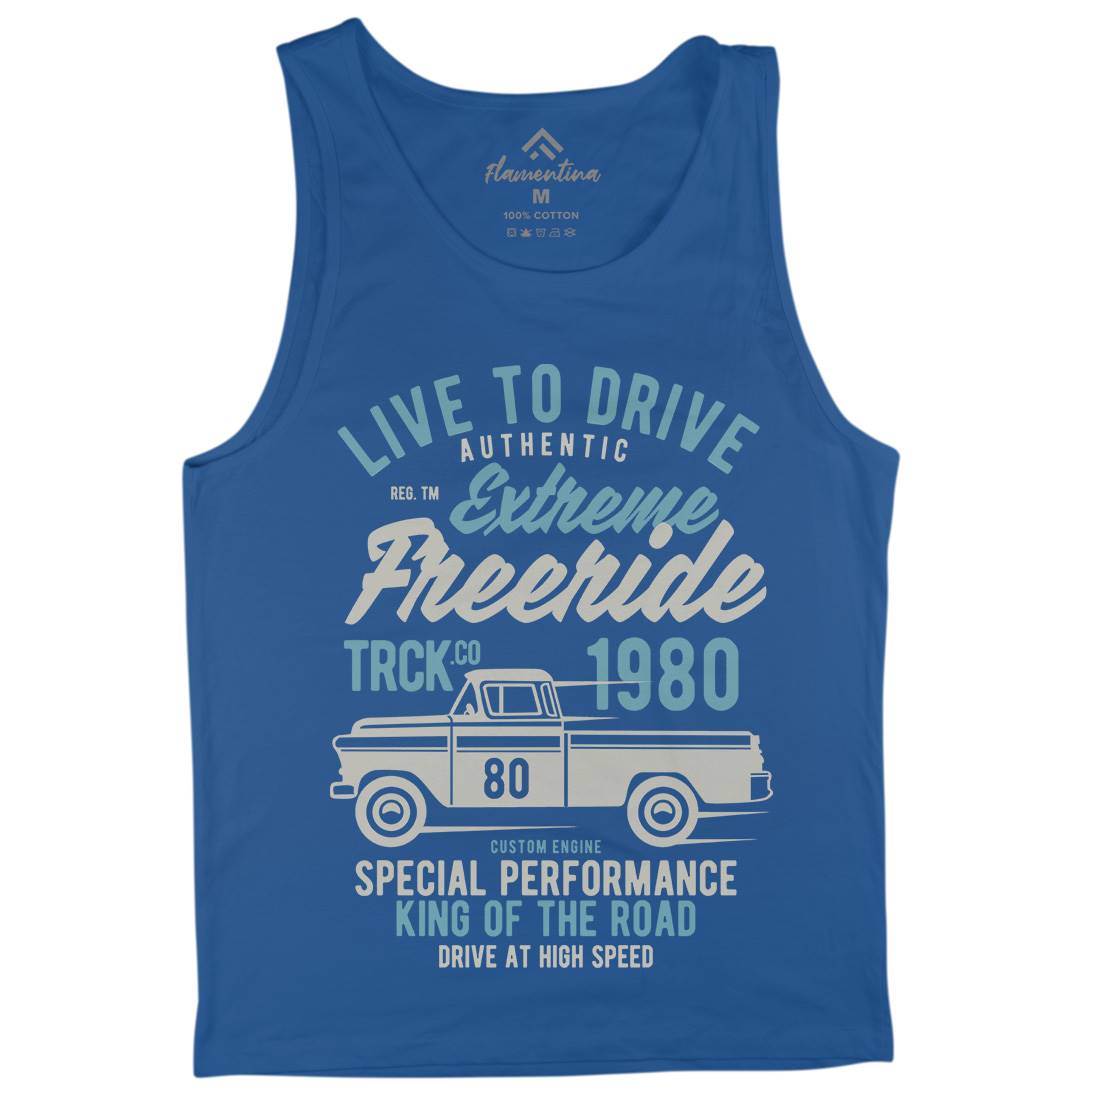 Extreme Freeride Truck Mens Tank Top Vest Cars B401